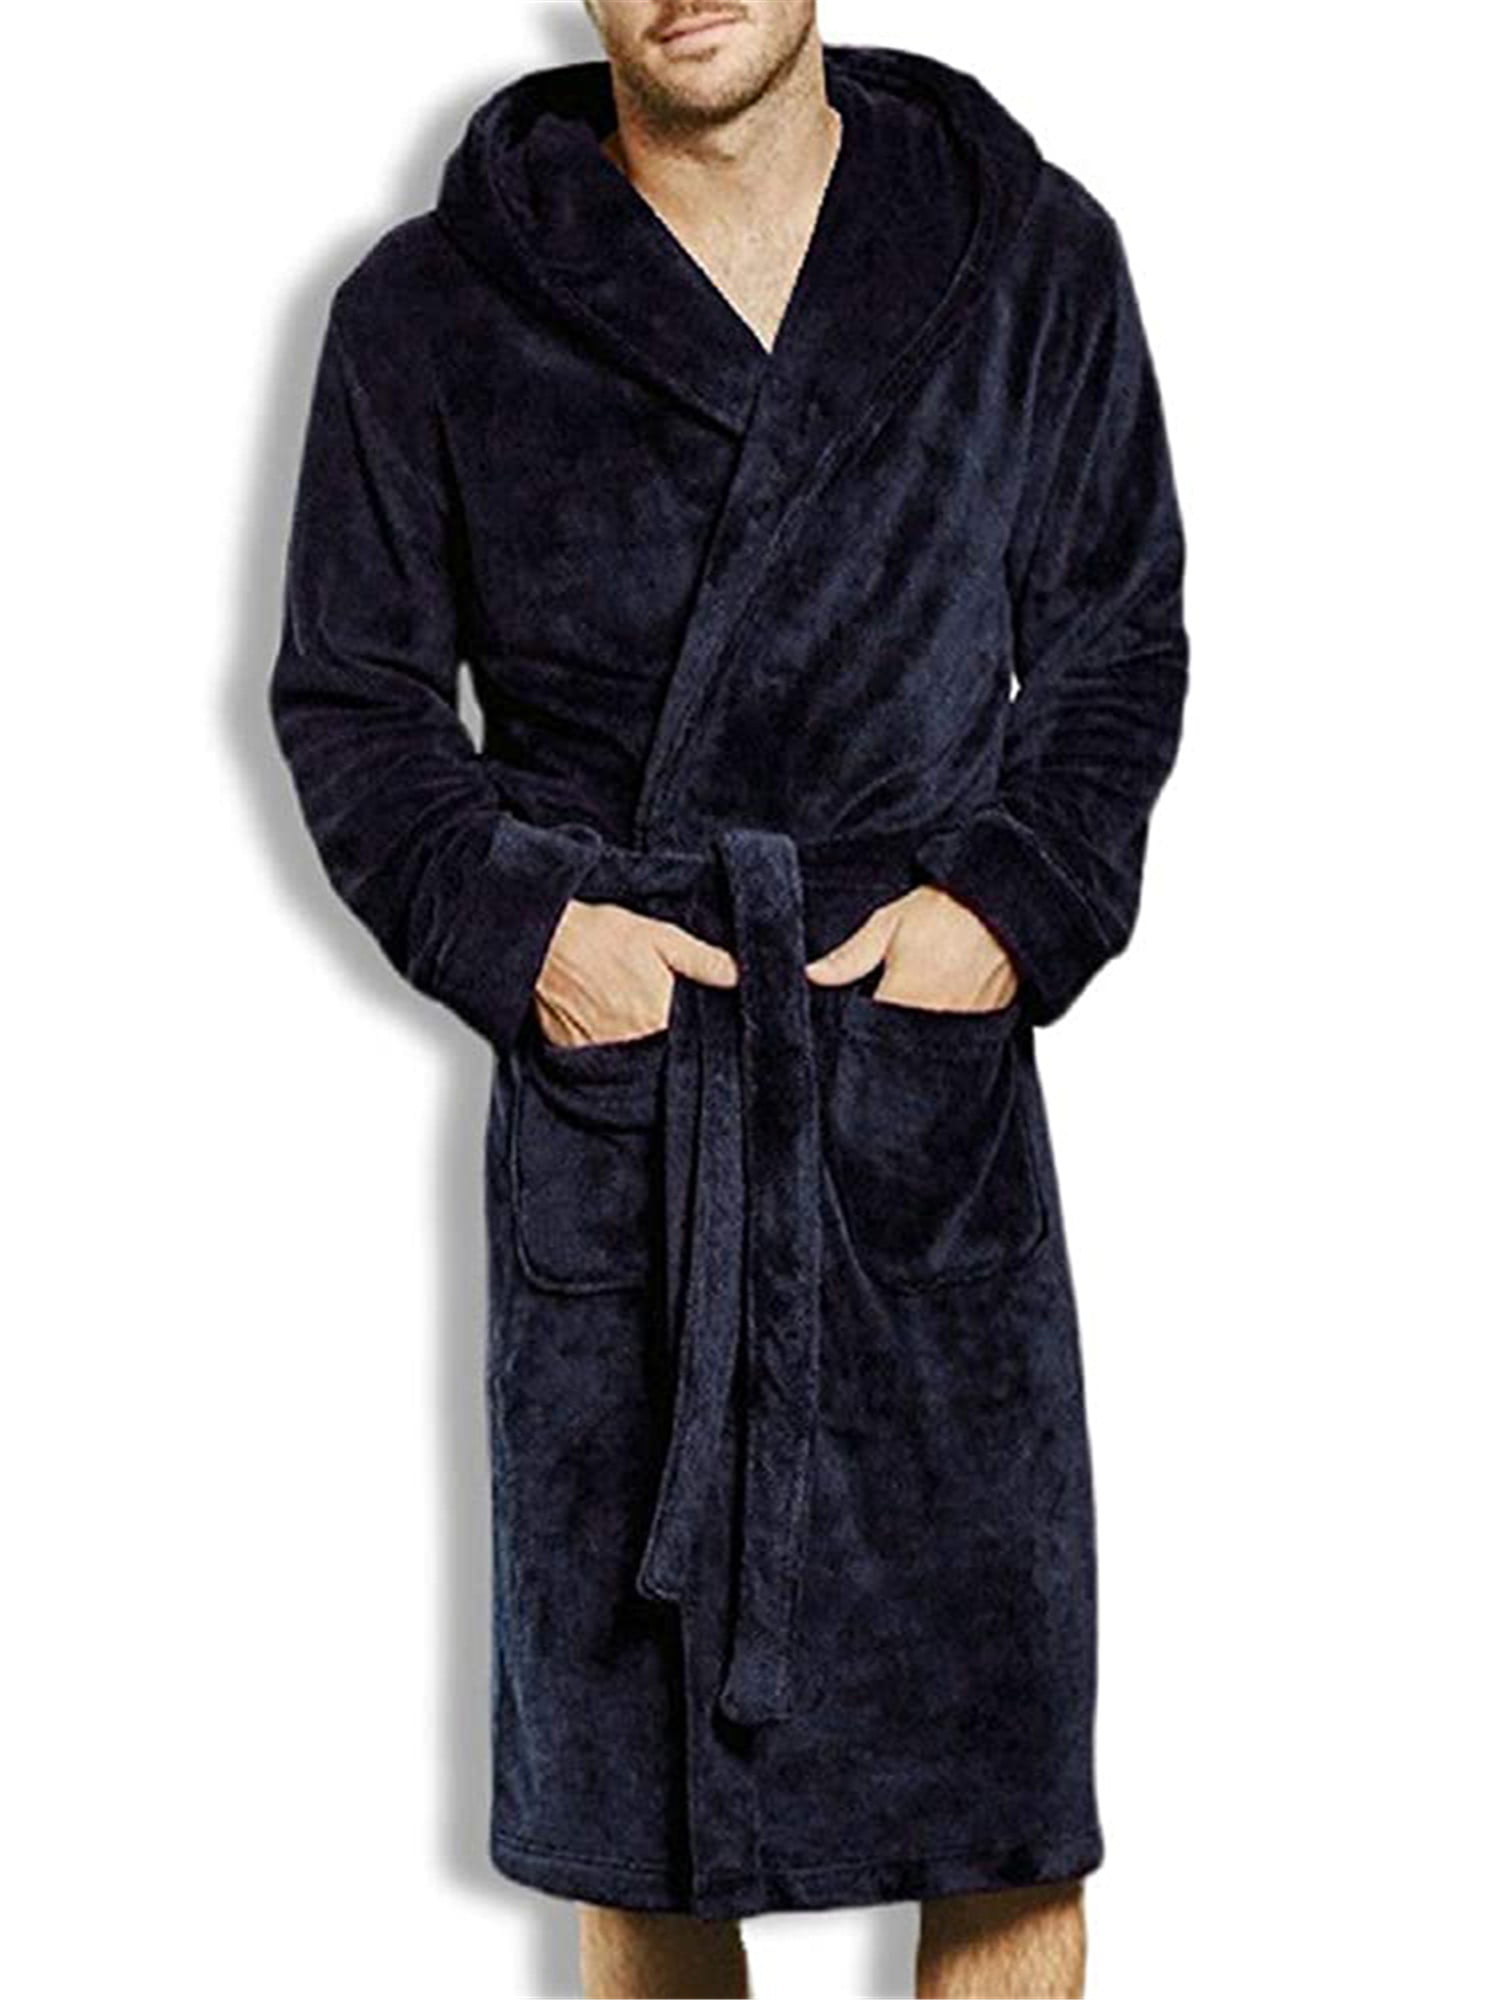 Ouyilu Men Long Sleeve Fleece Night Robe Shawl Collar Belt Closure Terry Turkish Bathrobe Sleepwear